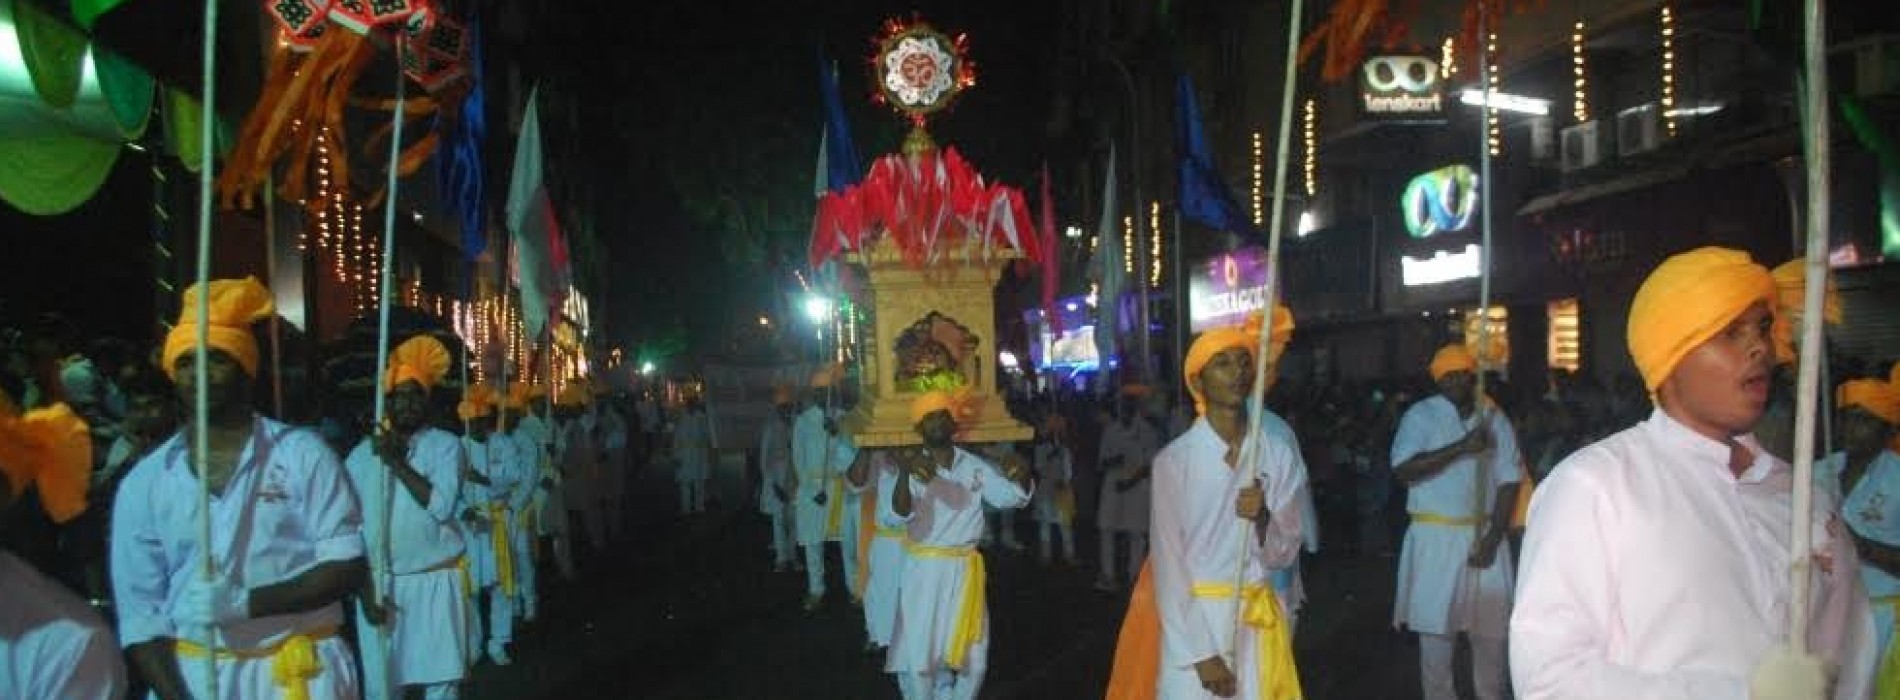 Shigmo festivities to begin in Goa from March 14 – 27, 2017